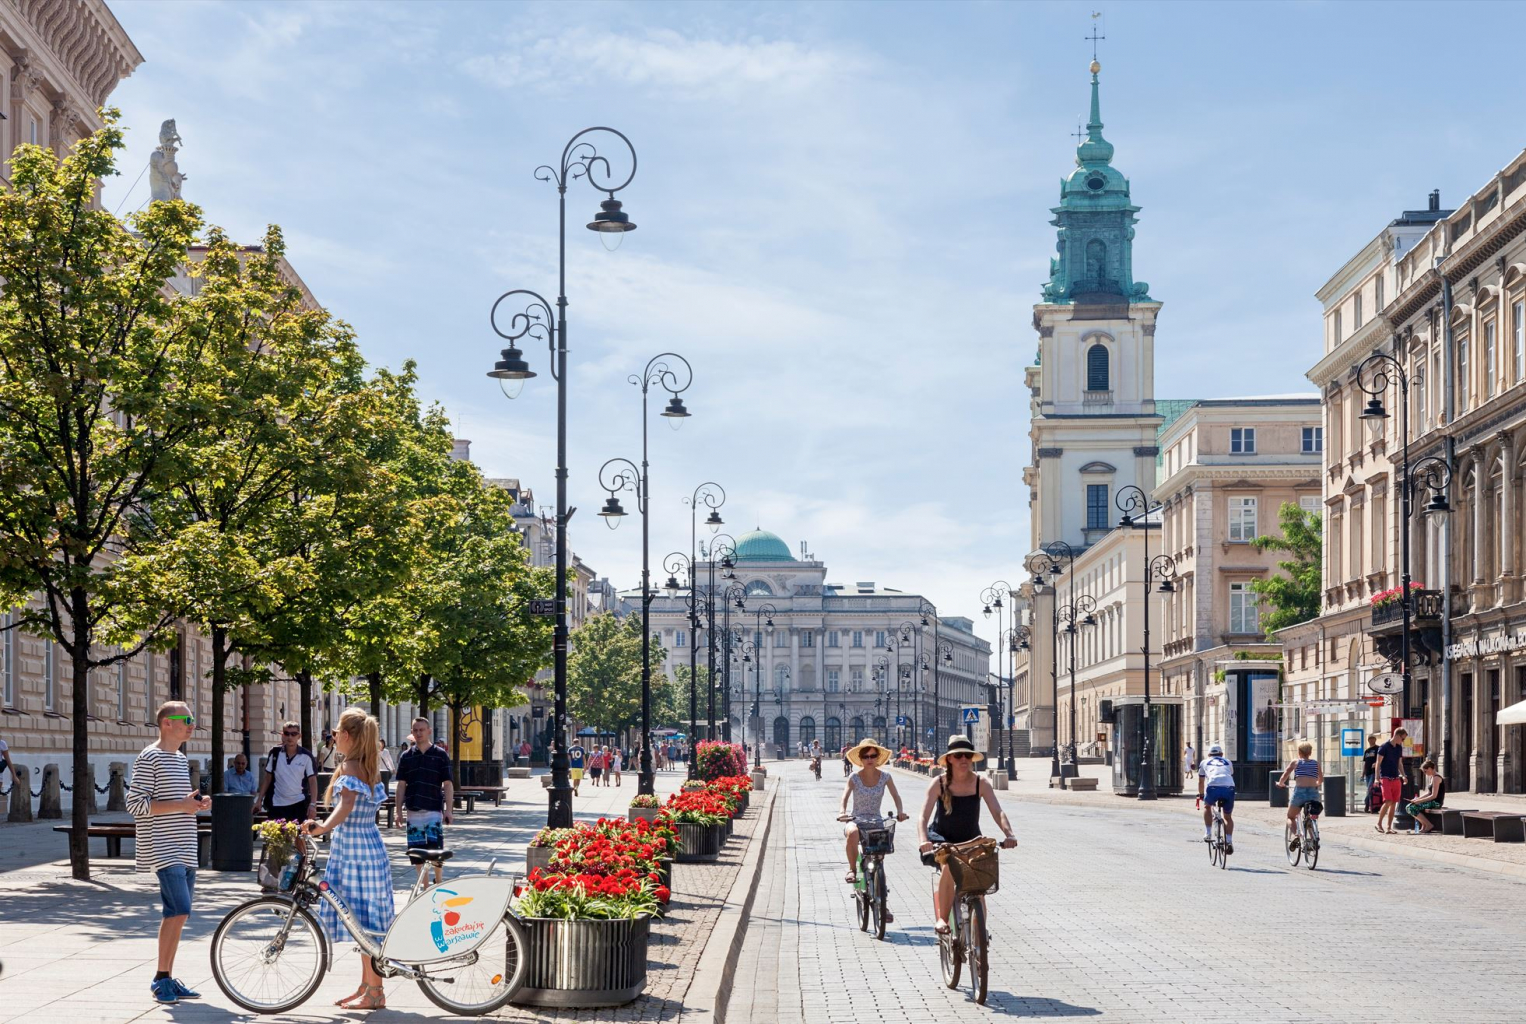 Tourismus in Polen auf Niveau vor Corona